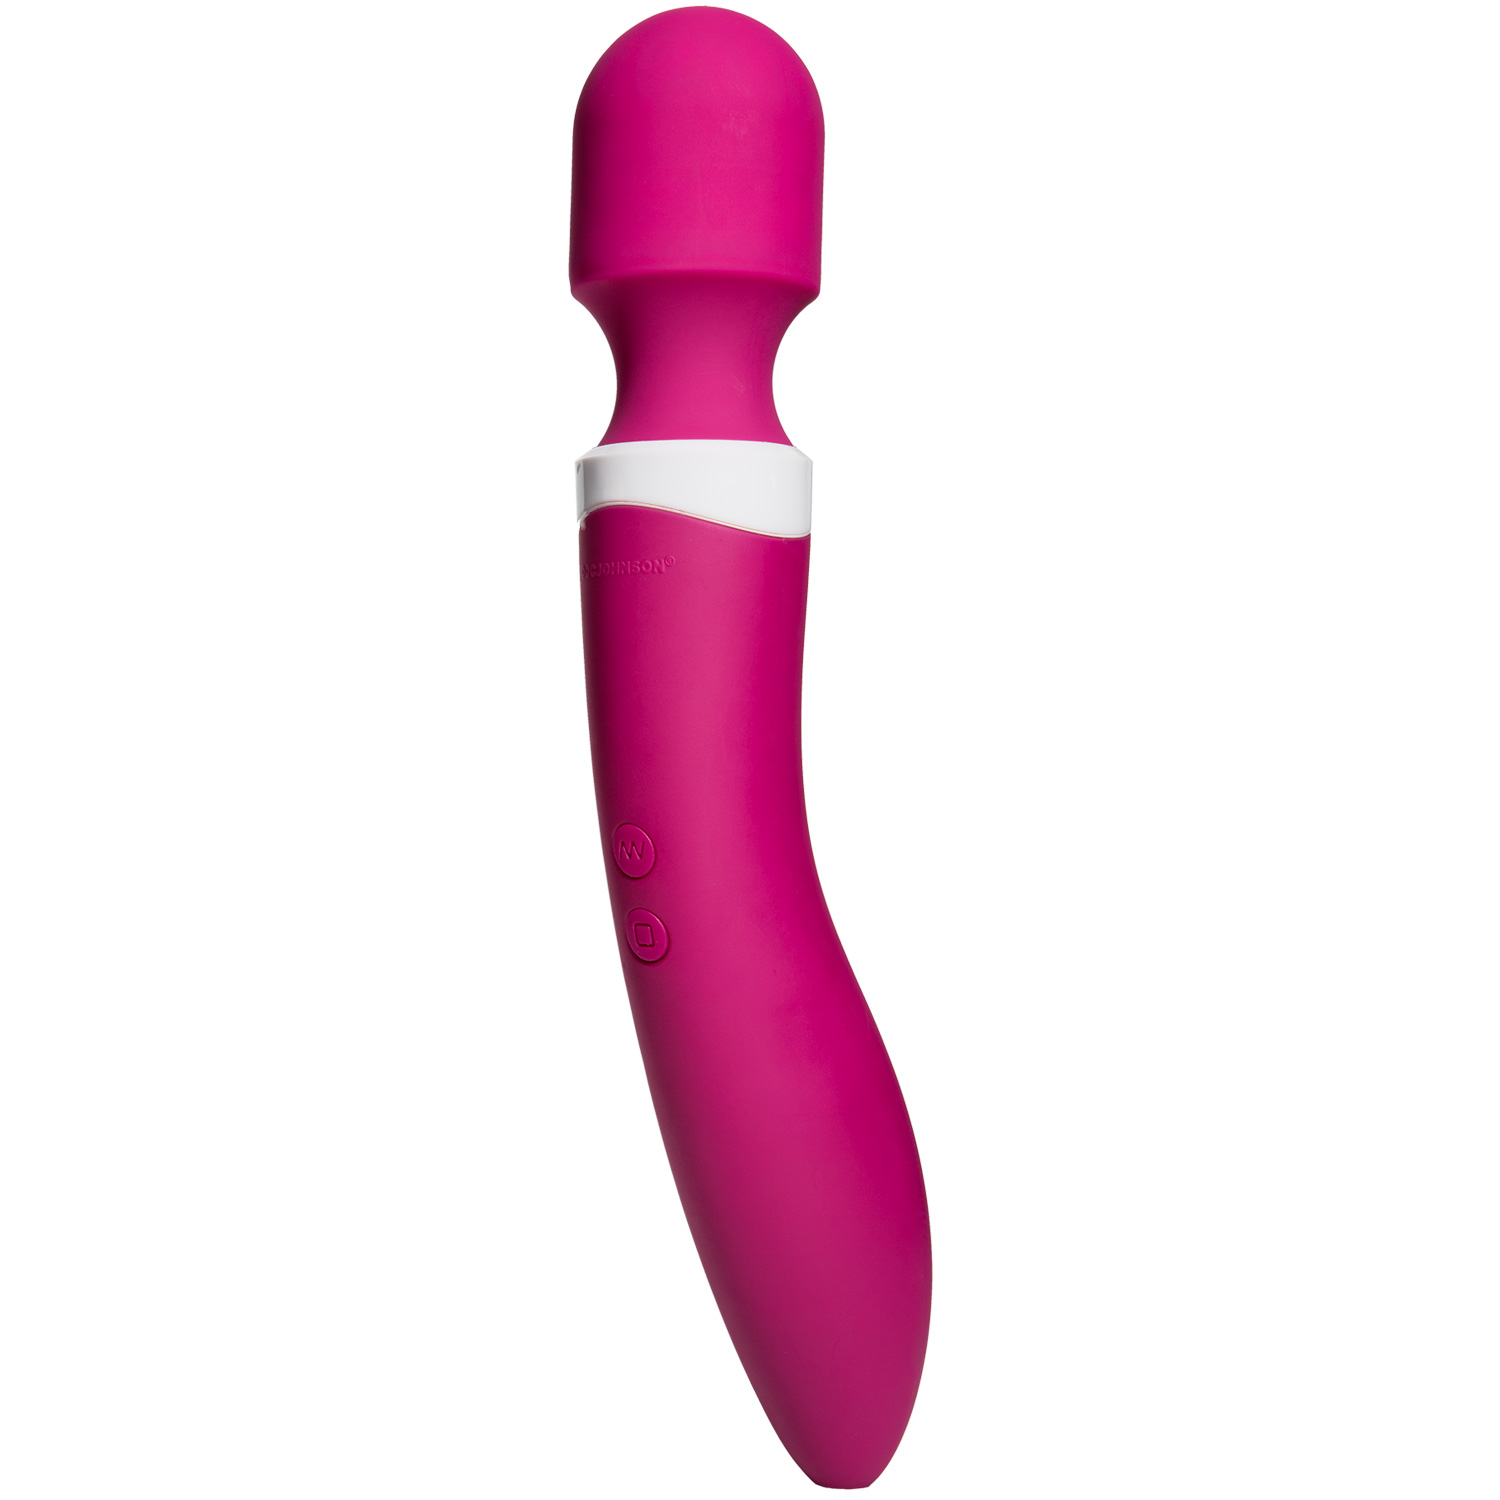 Ivibe Select Doc Johnson iWand Vibrator      - Pink thumbnail